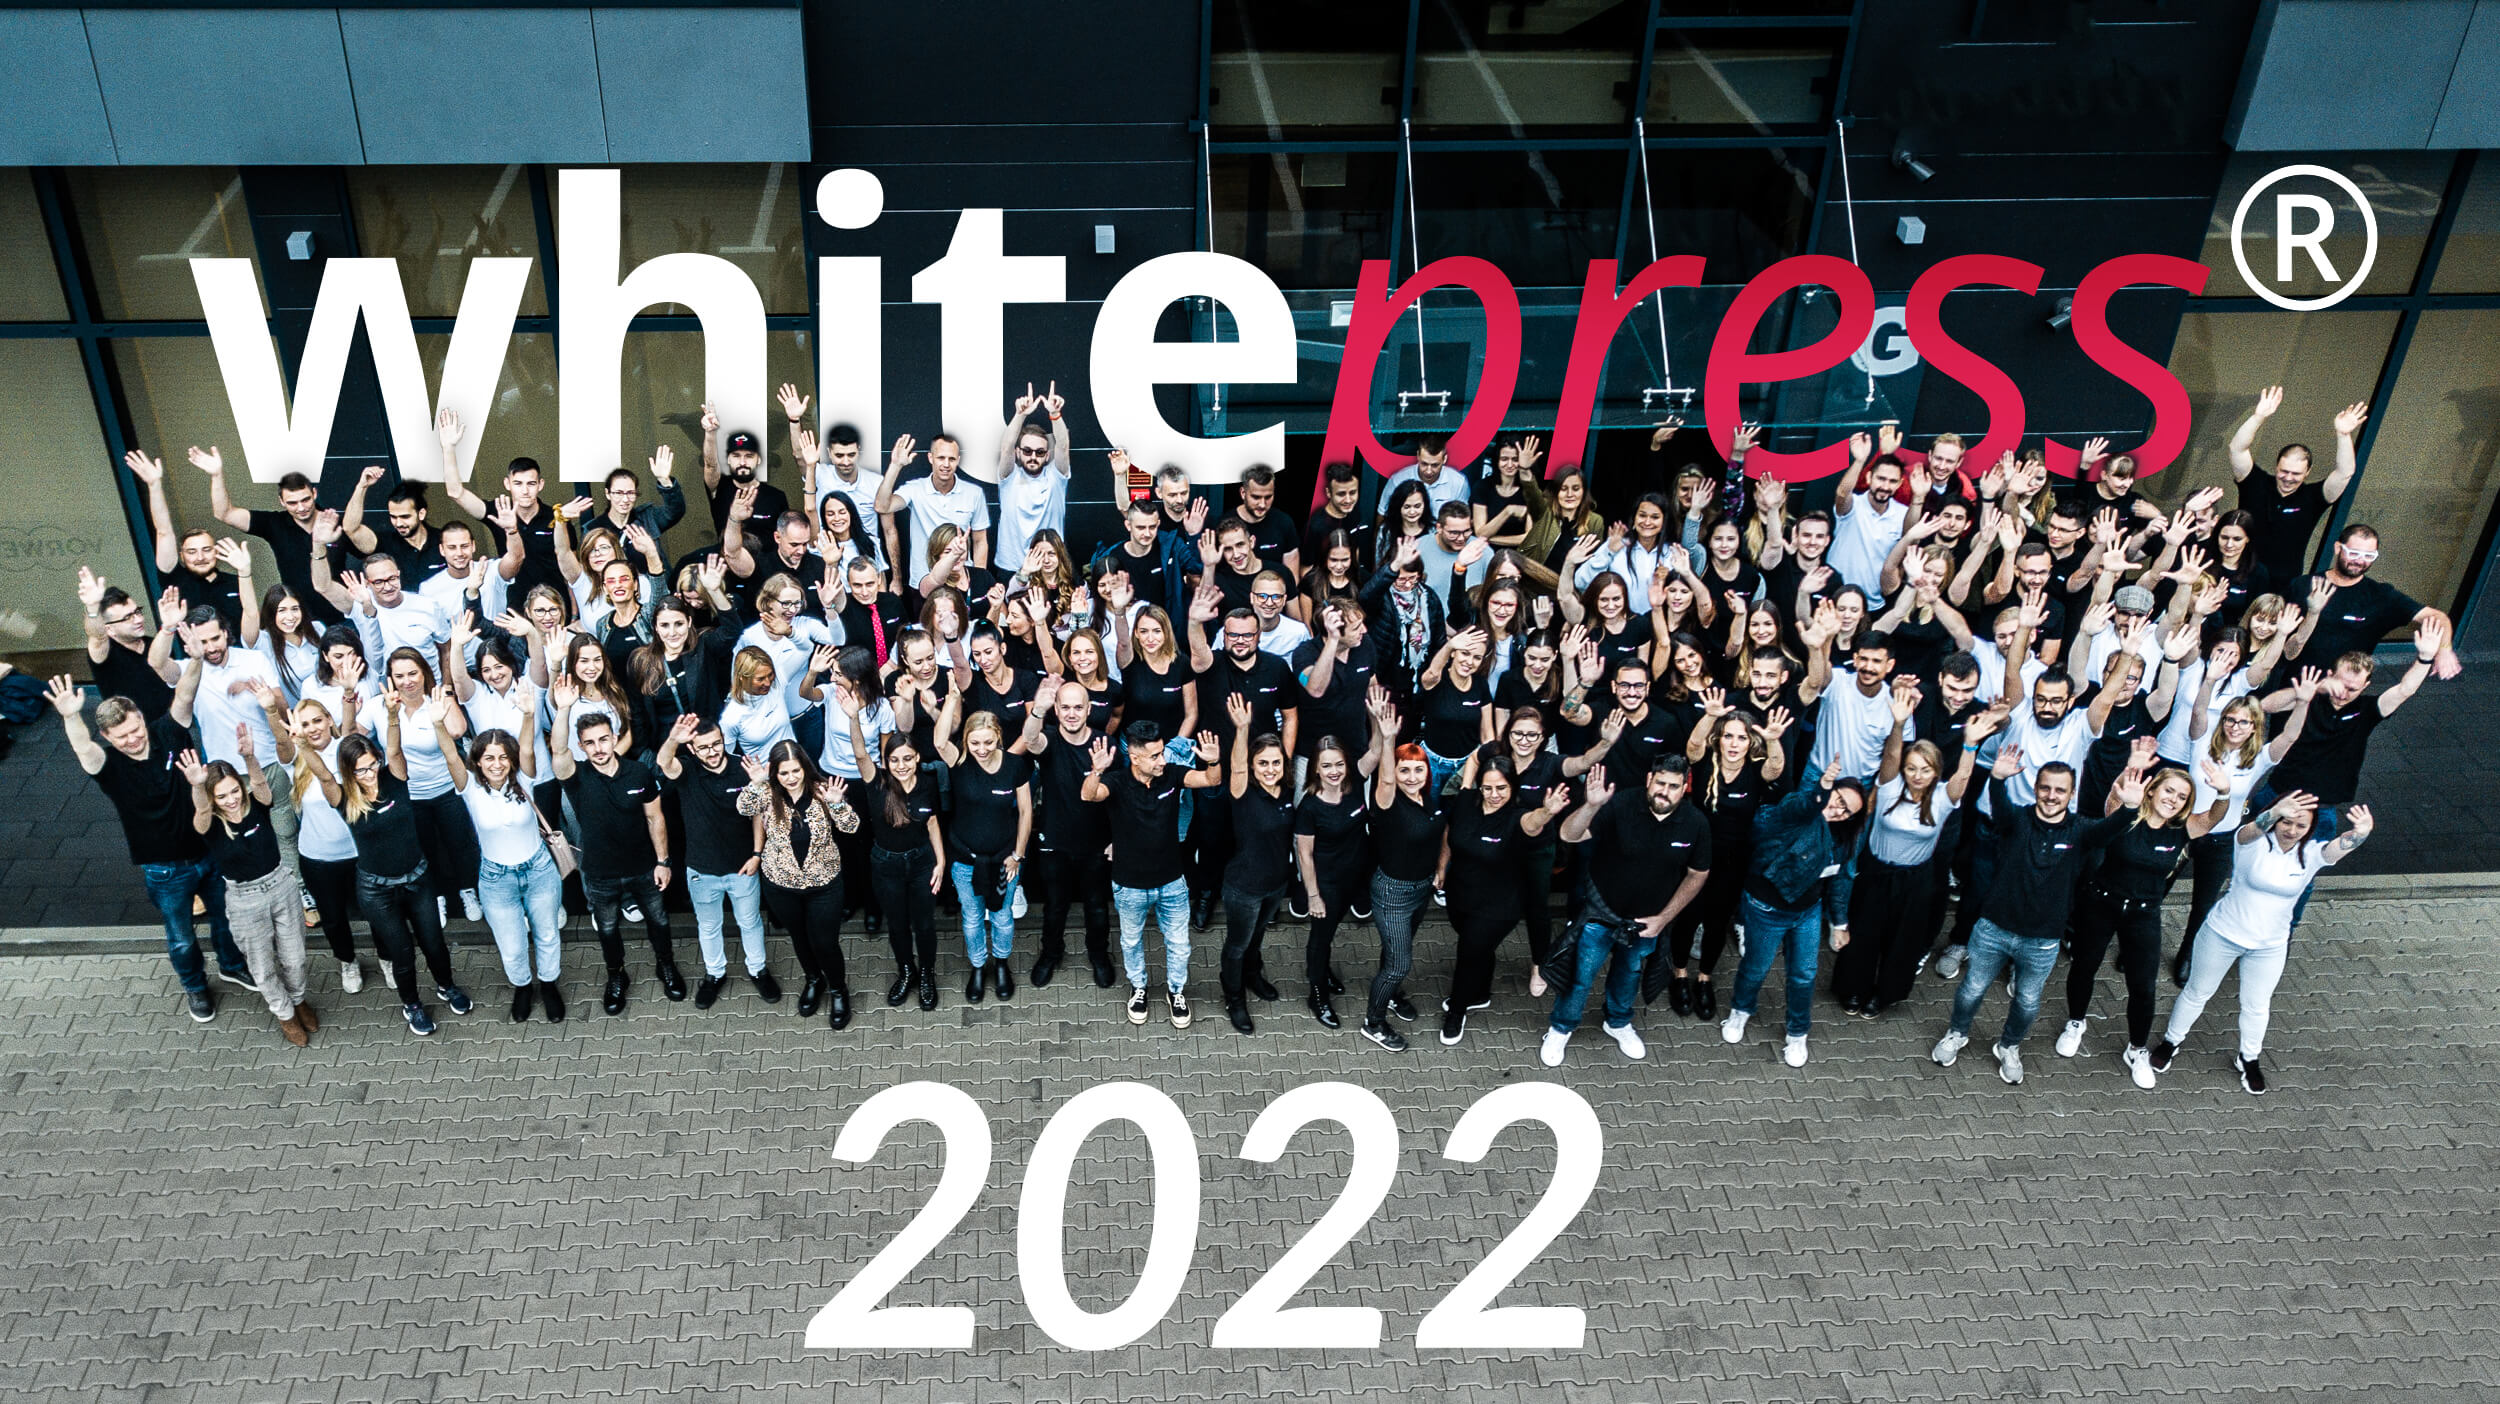 WhitePress tým